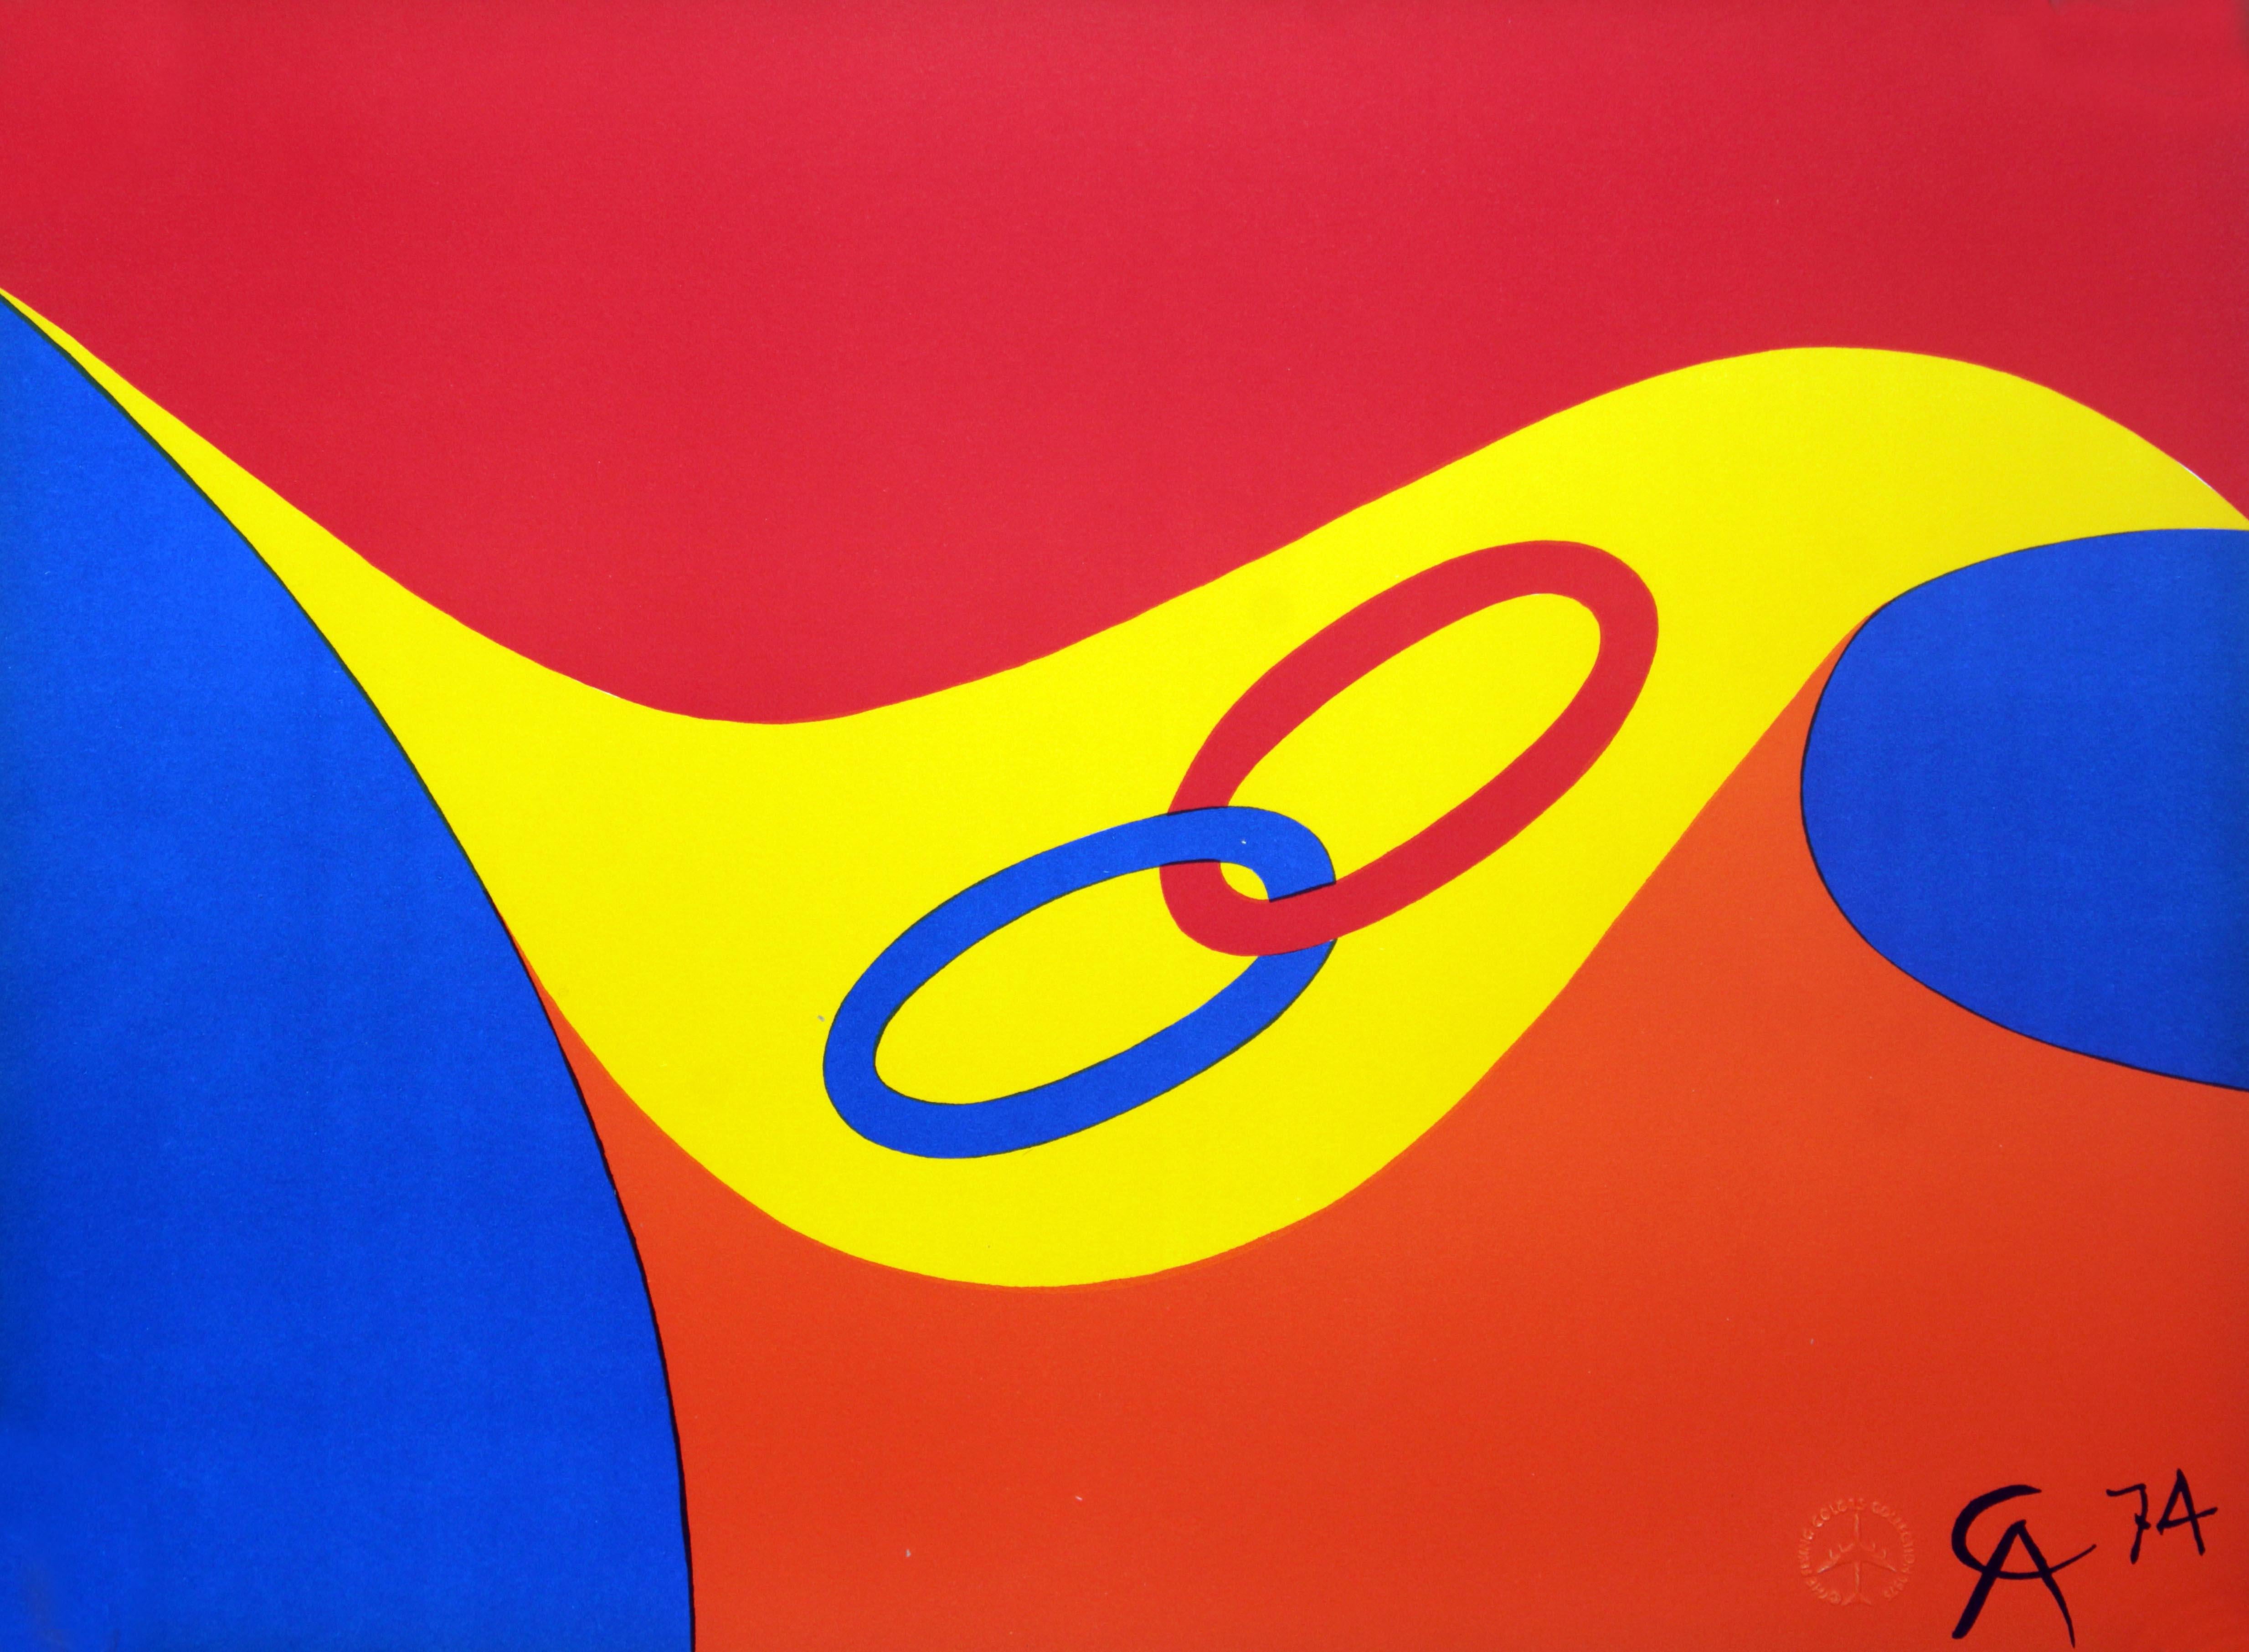 Freundschaft – Alexander Calder aus der Kollektion Fliegende Farben, signiert in Teller